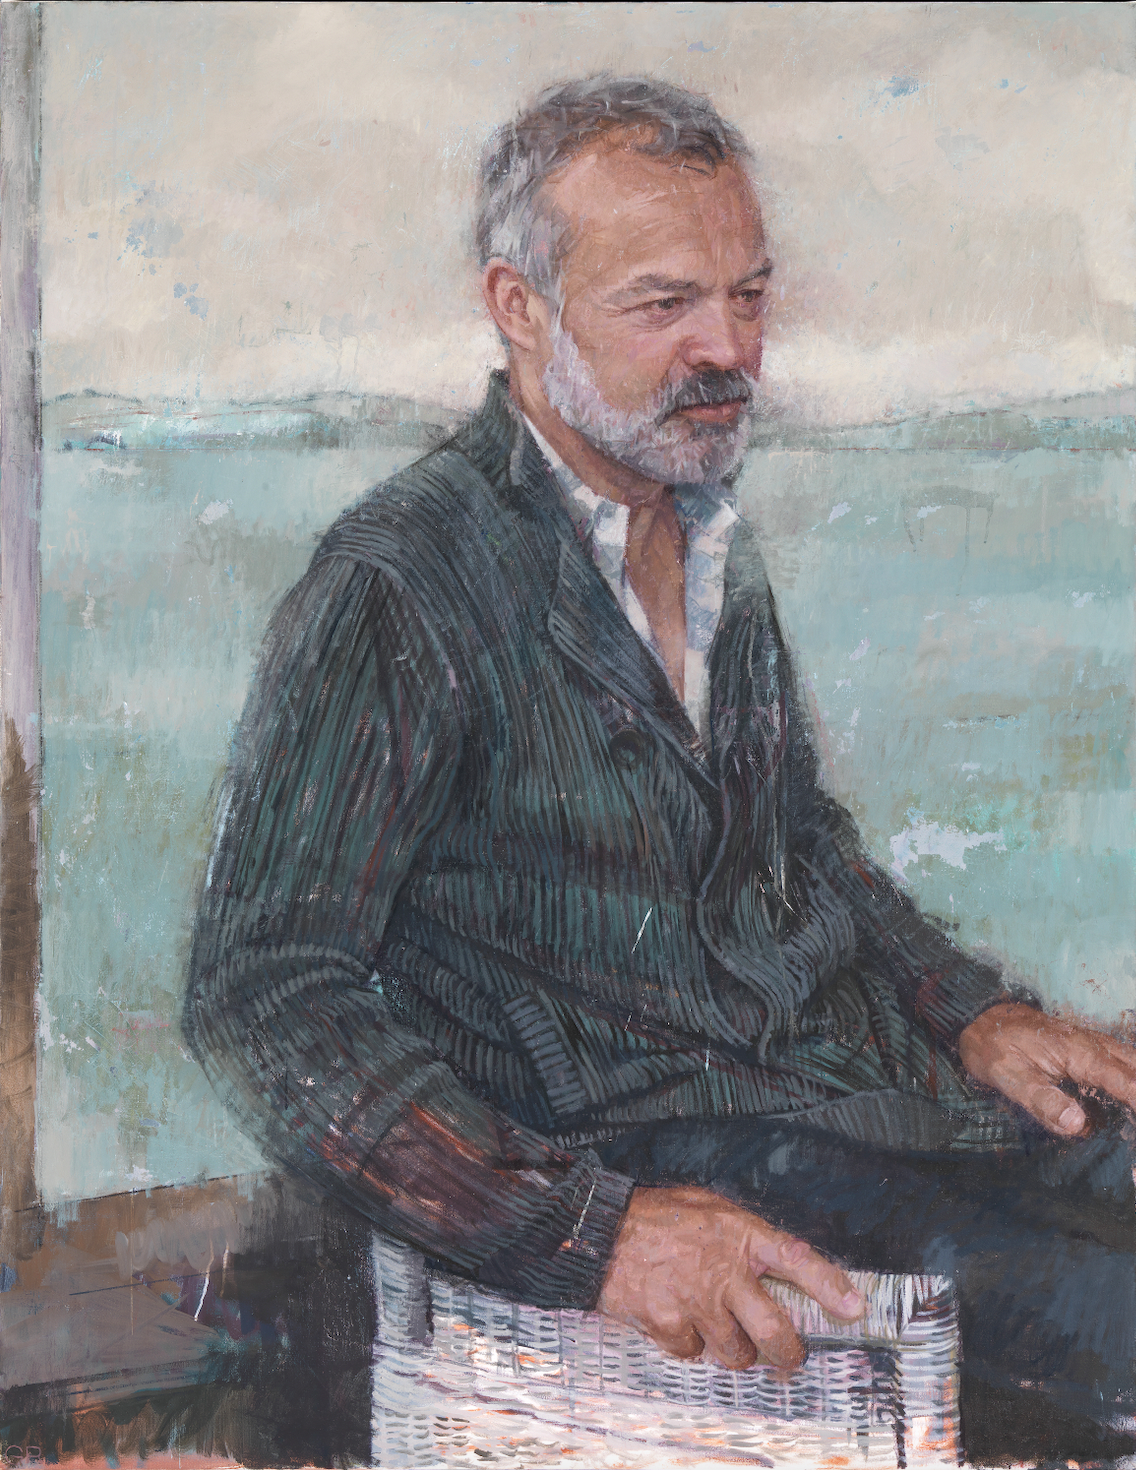 Gareth Reid's portrait of TV host Graham Norton, which hangs in the National Gallery of Ireland